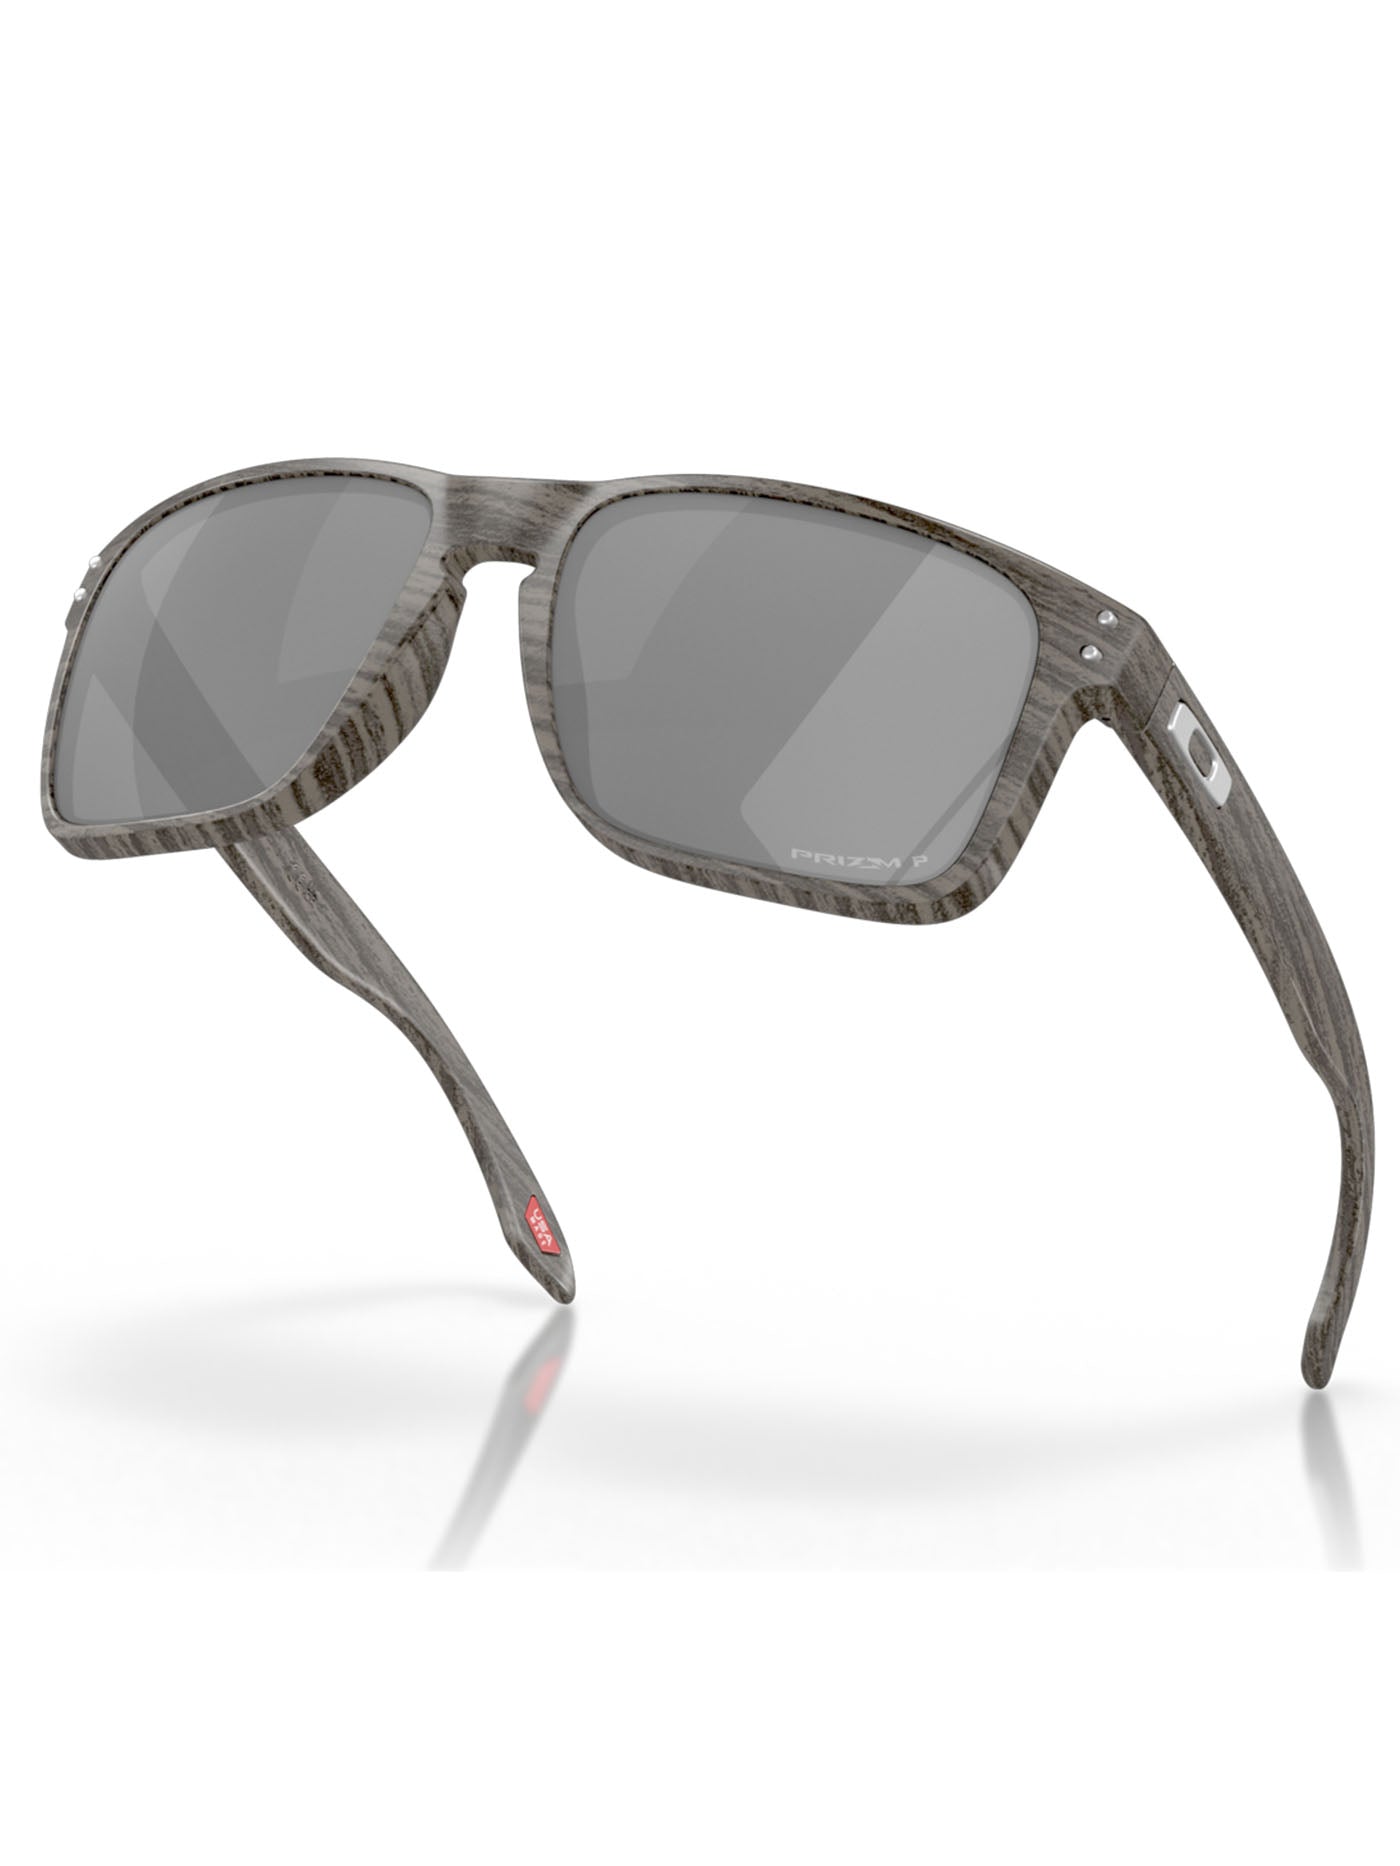 Oakley 2024 Holbrook XL Woodgrain/Prizm Black Polarized Sunglasses